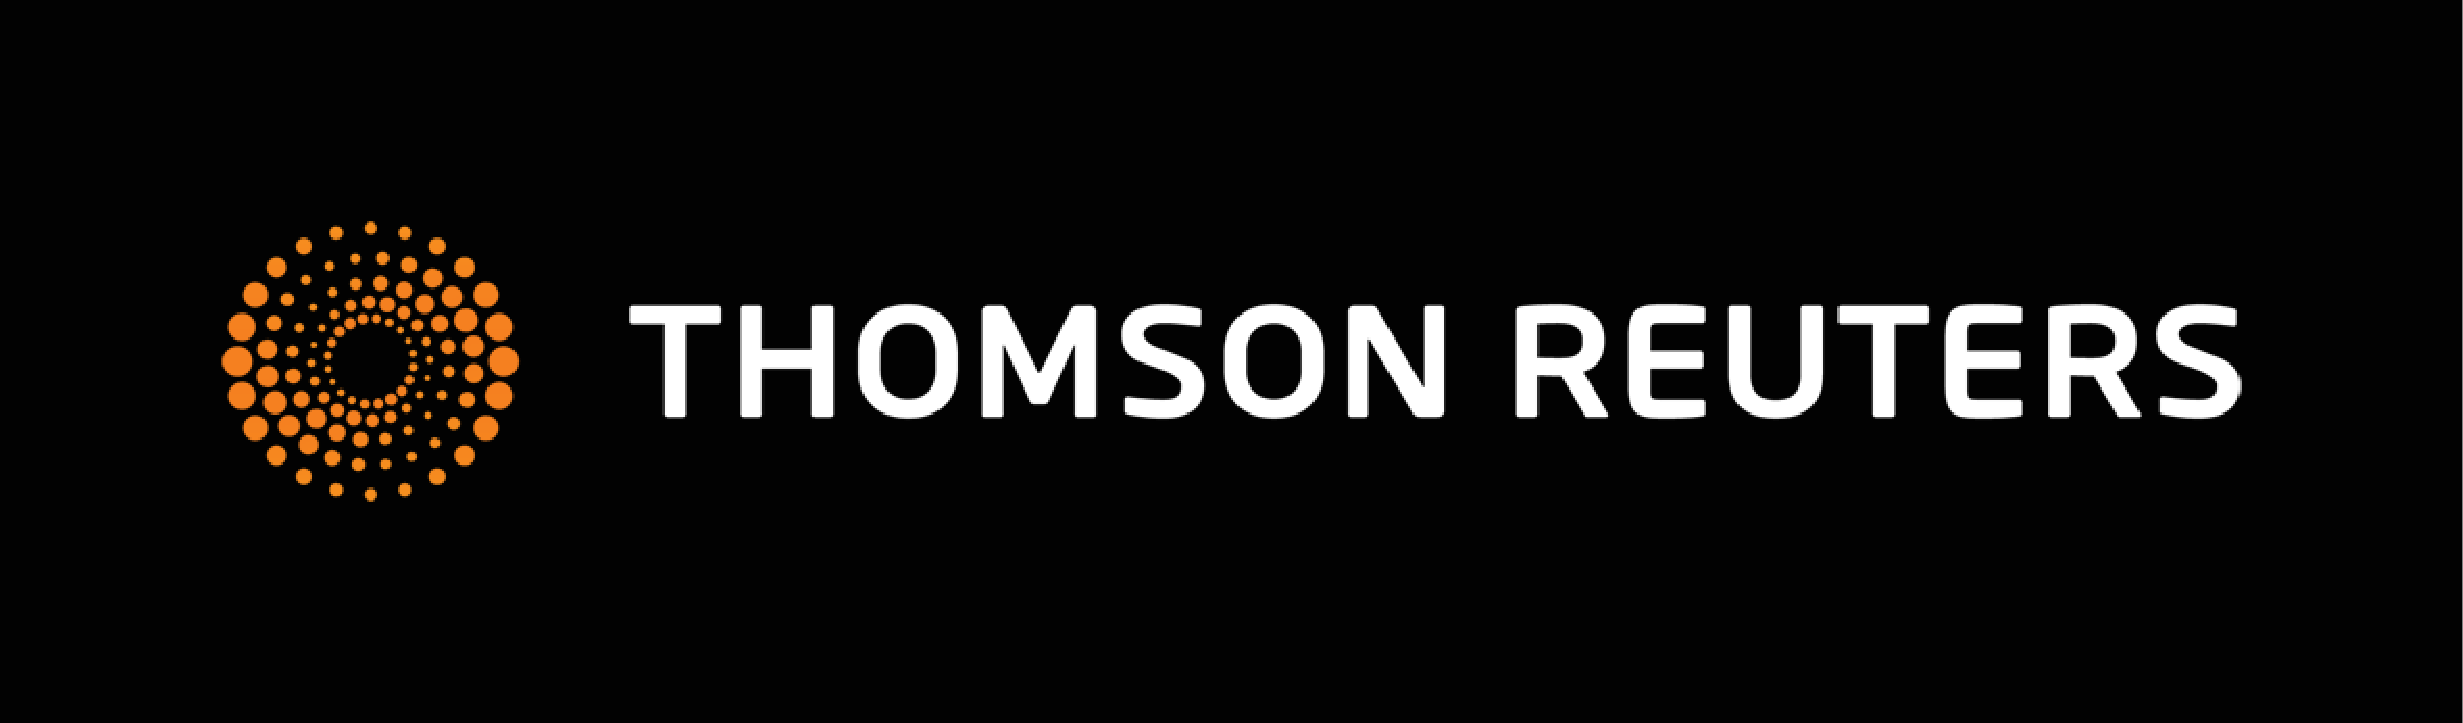 Thomson reuters australia legal online betting bitcoin drug bust